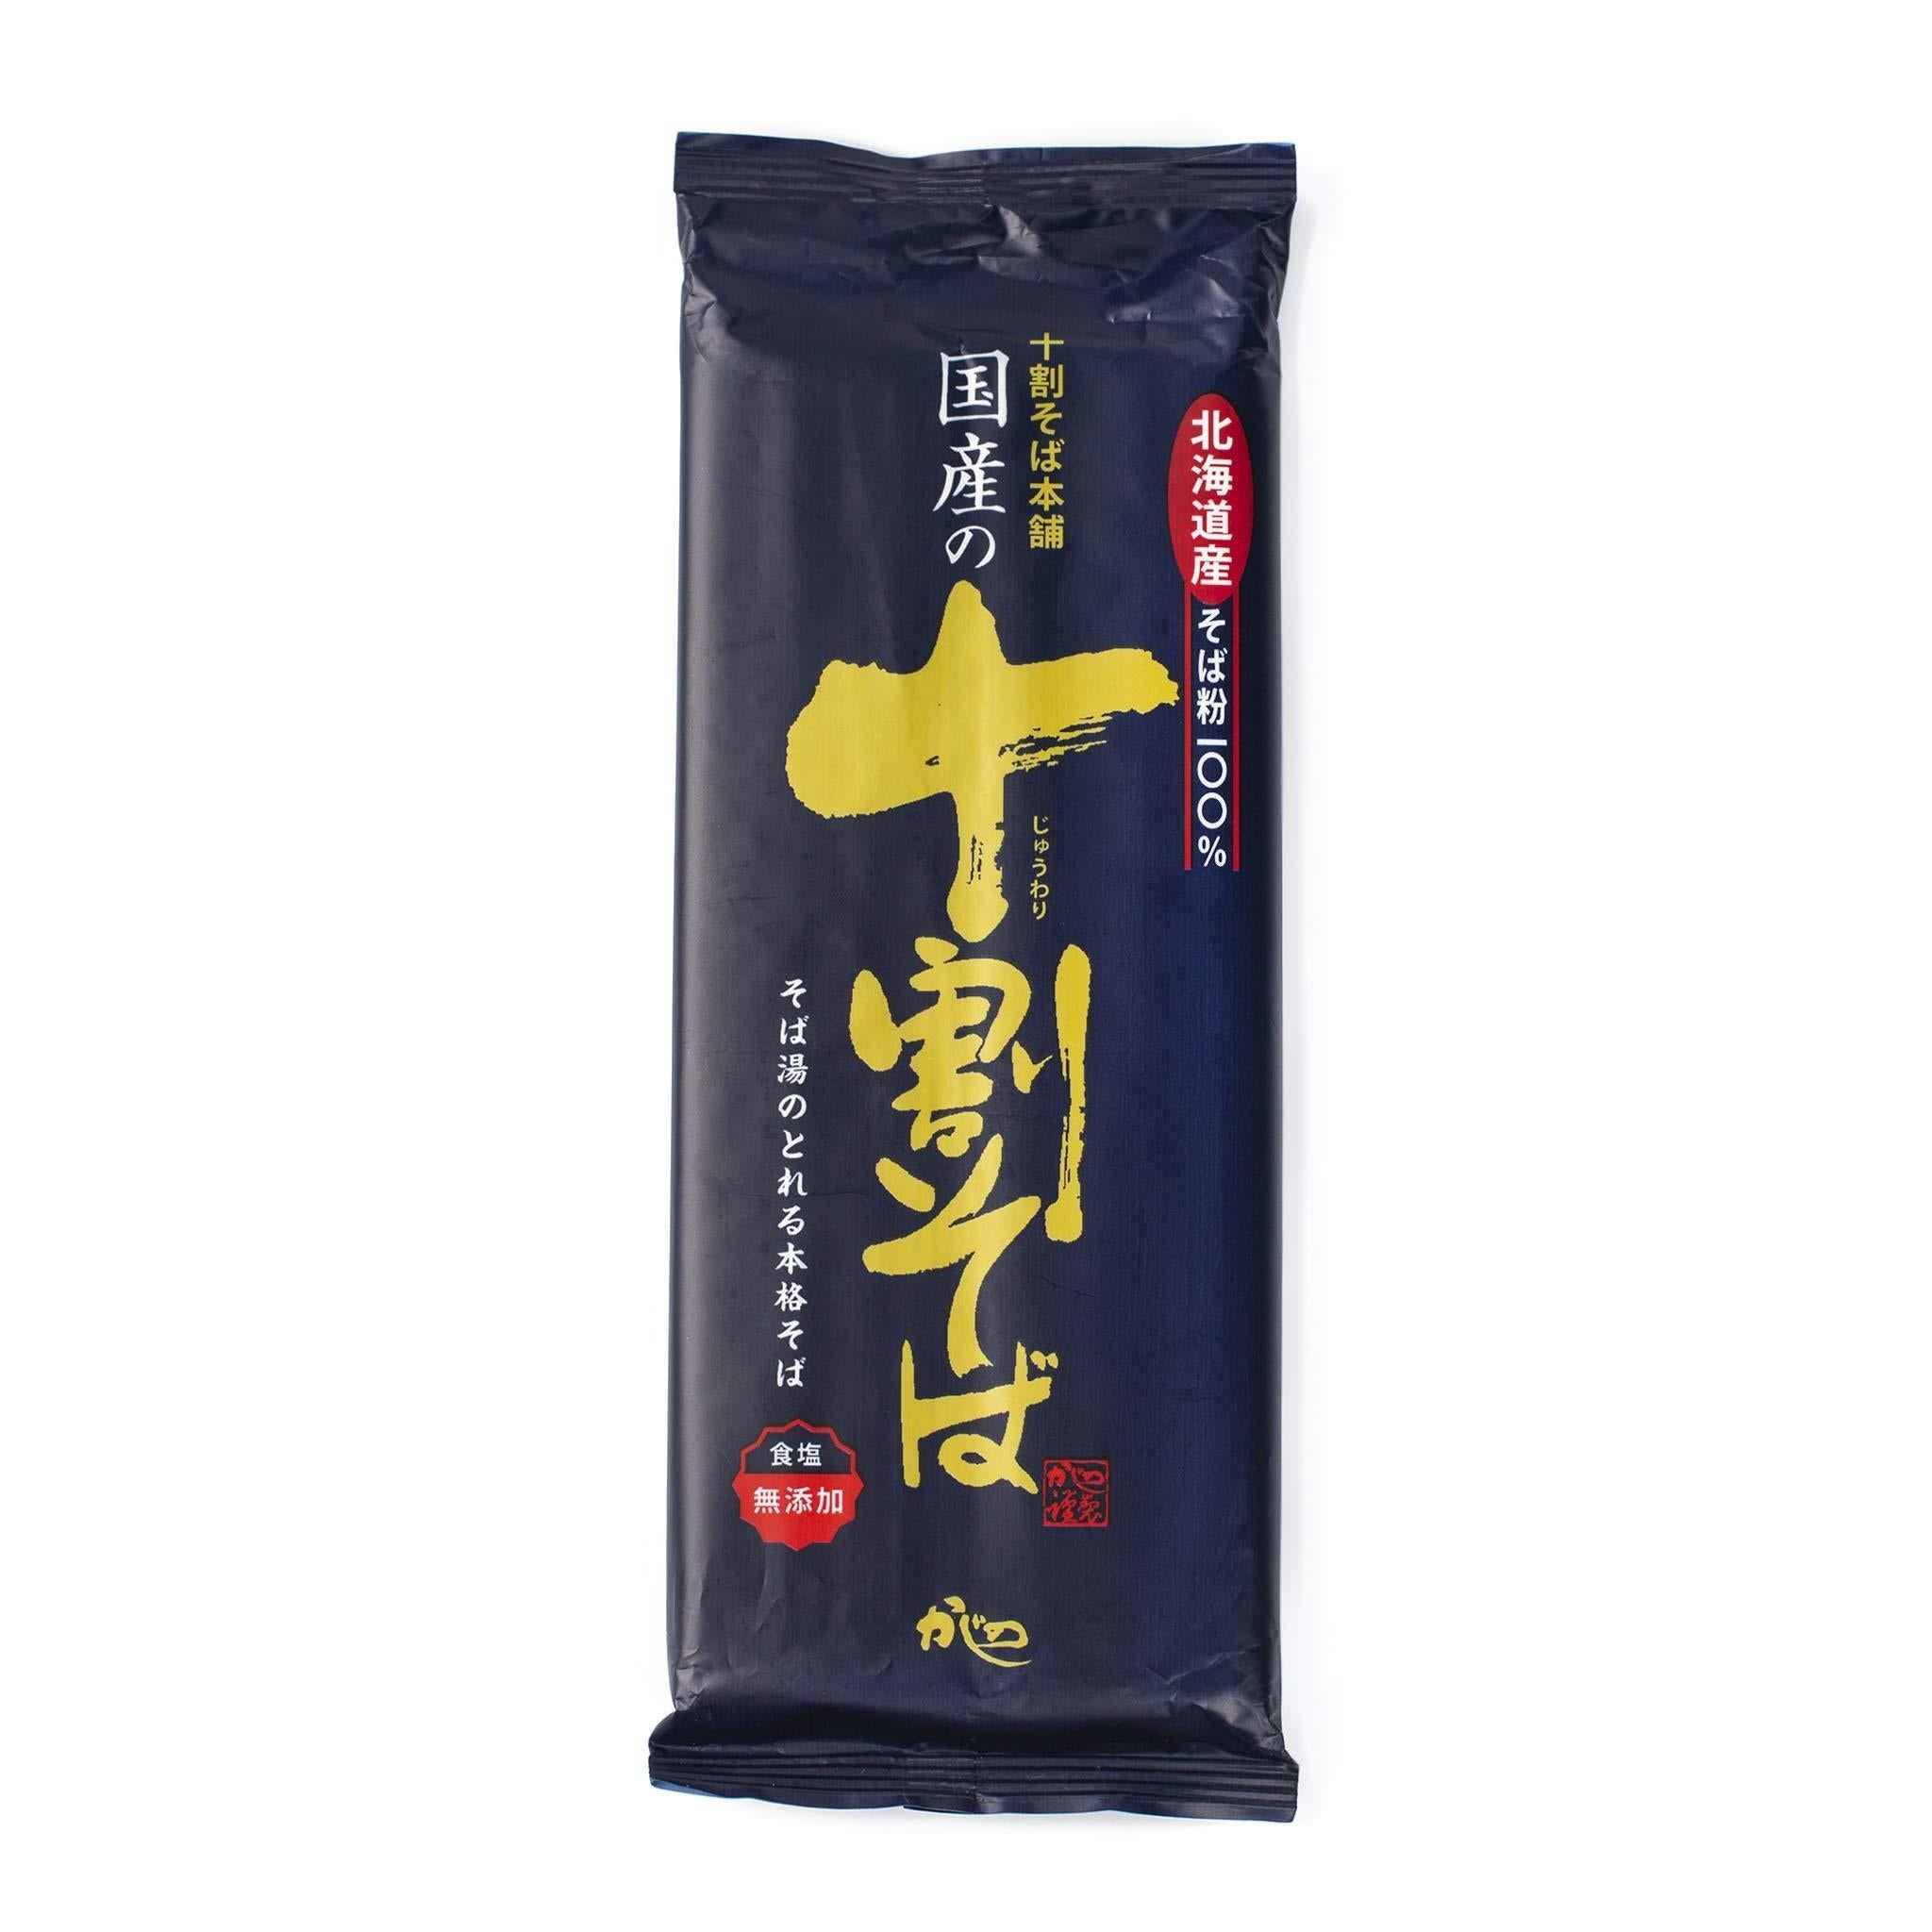 100% Buckwheat Dried Juwari Soba Noodles, No Wheat Flour, All ingredients from Japan, 7.05 oz